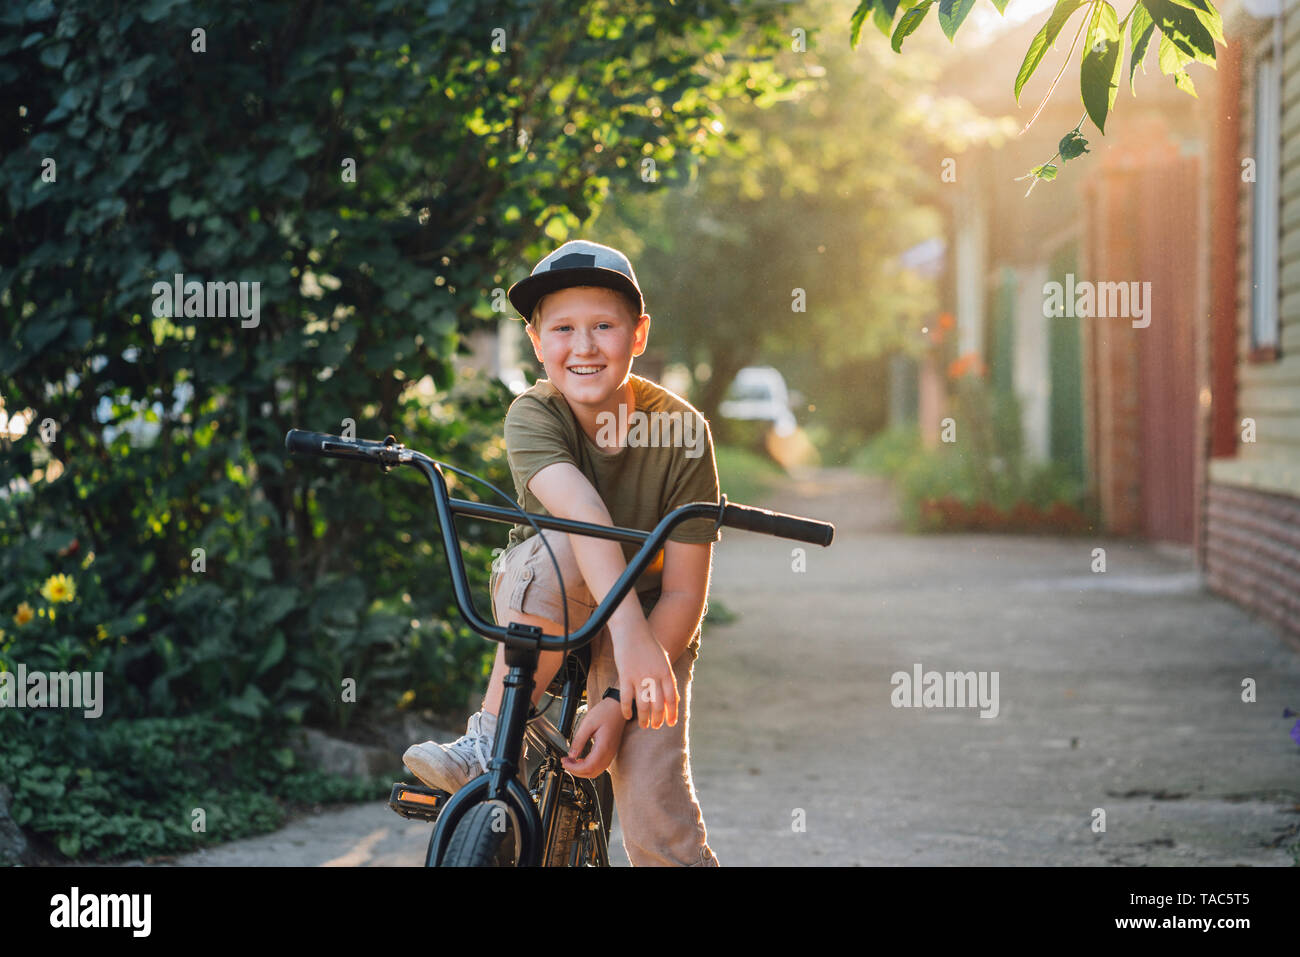 Portrait of smiling boy with bmx bike on road Stock Photo